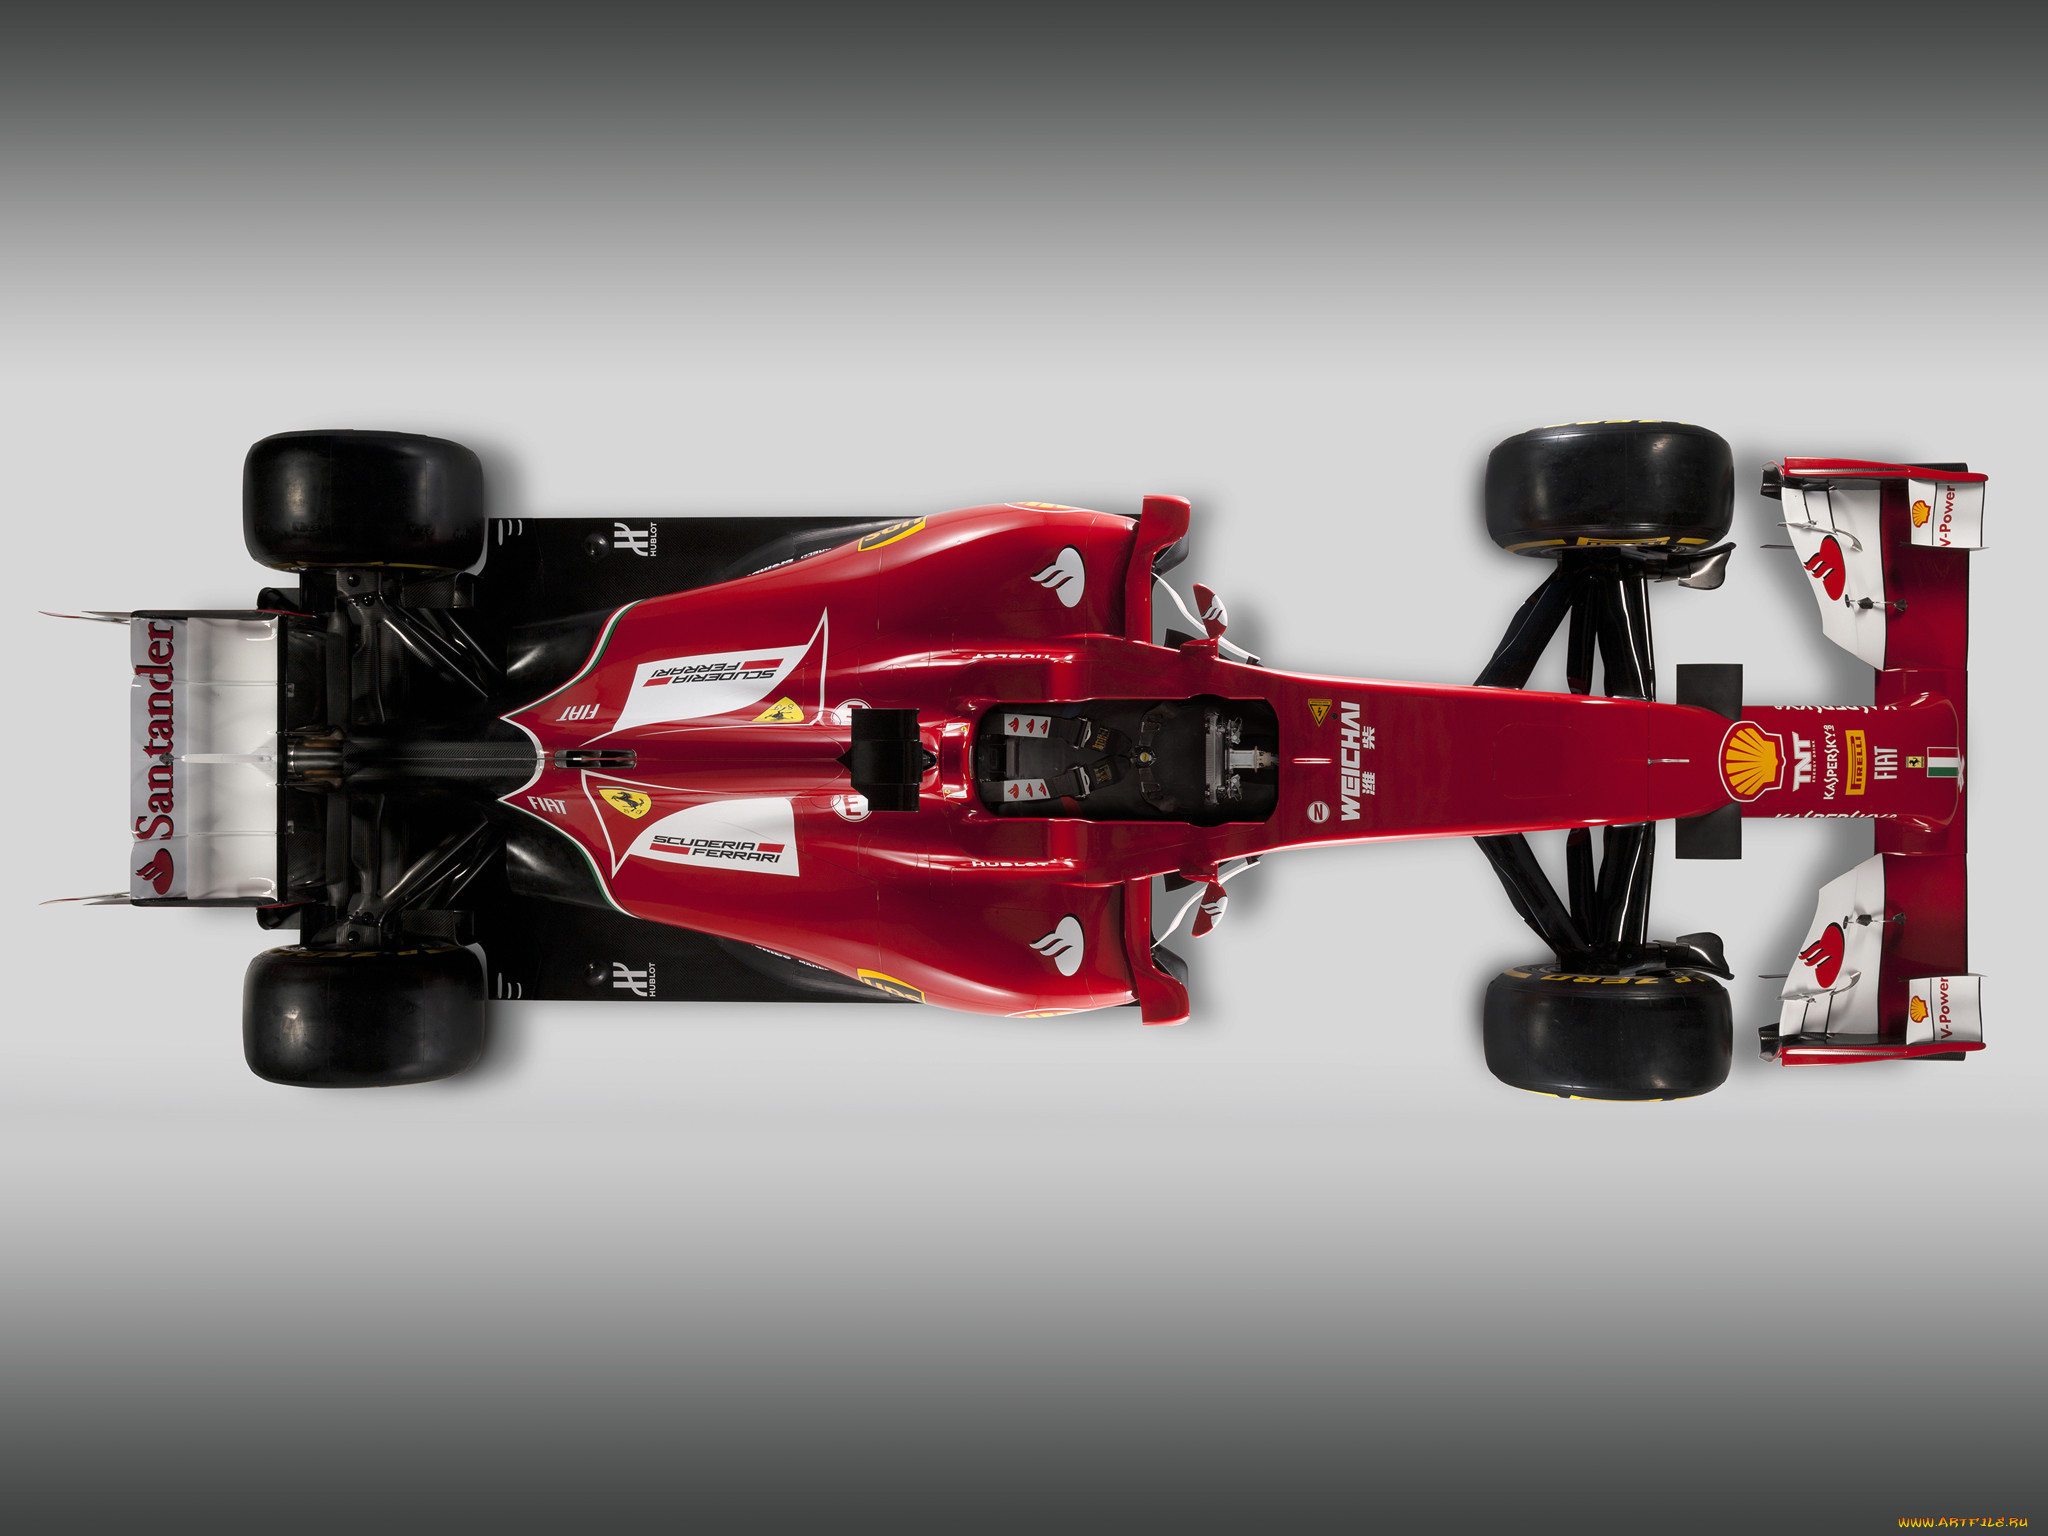 SF 138 Ferrari. Ferrari f138 2013 характеристики описание. Longjia Formula 150. Ferrari t80